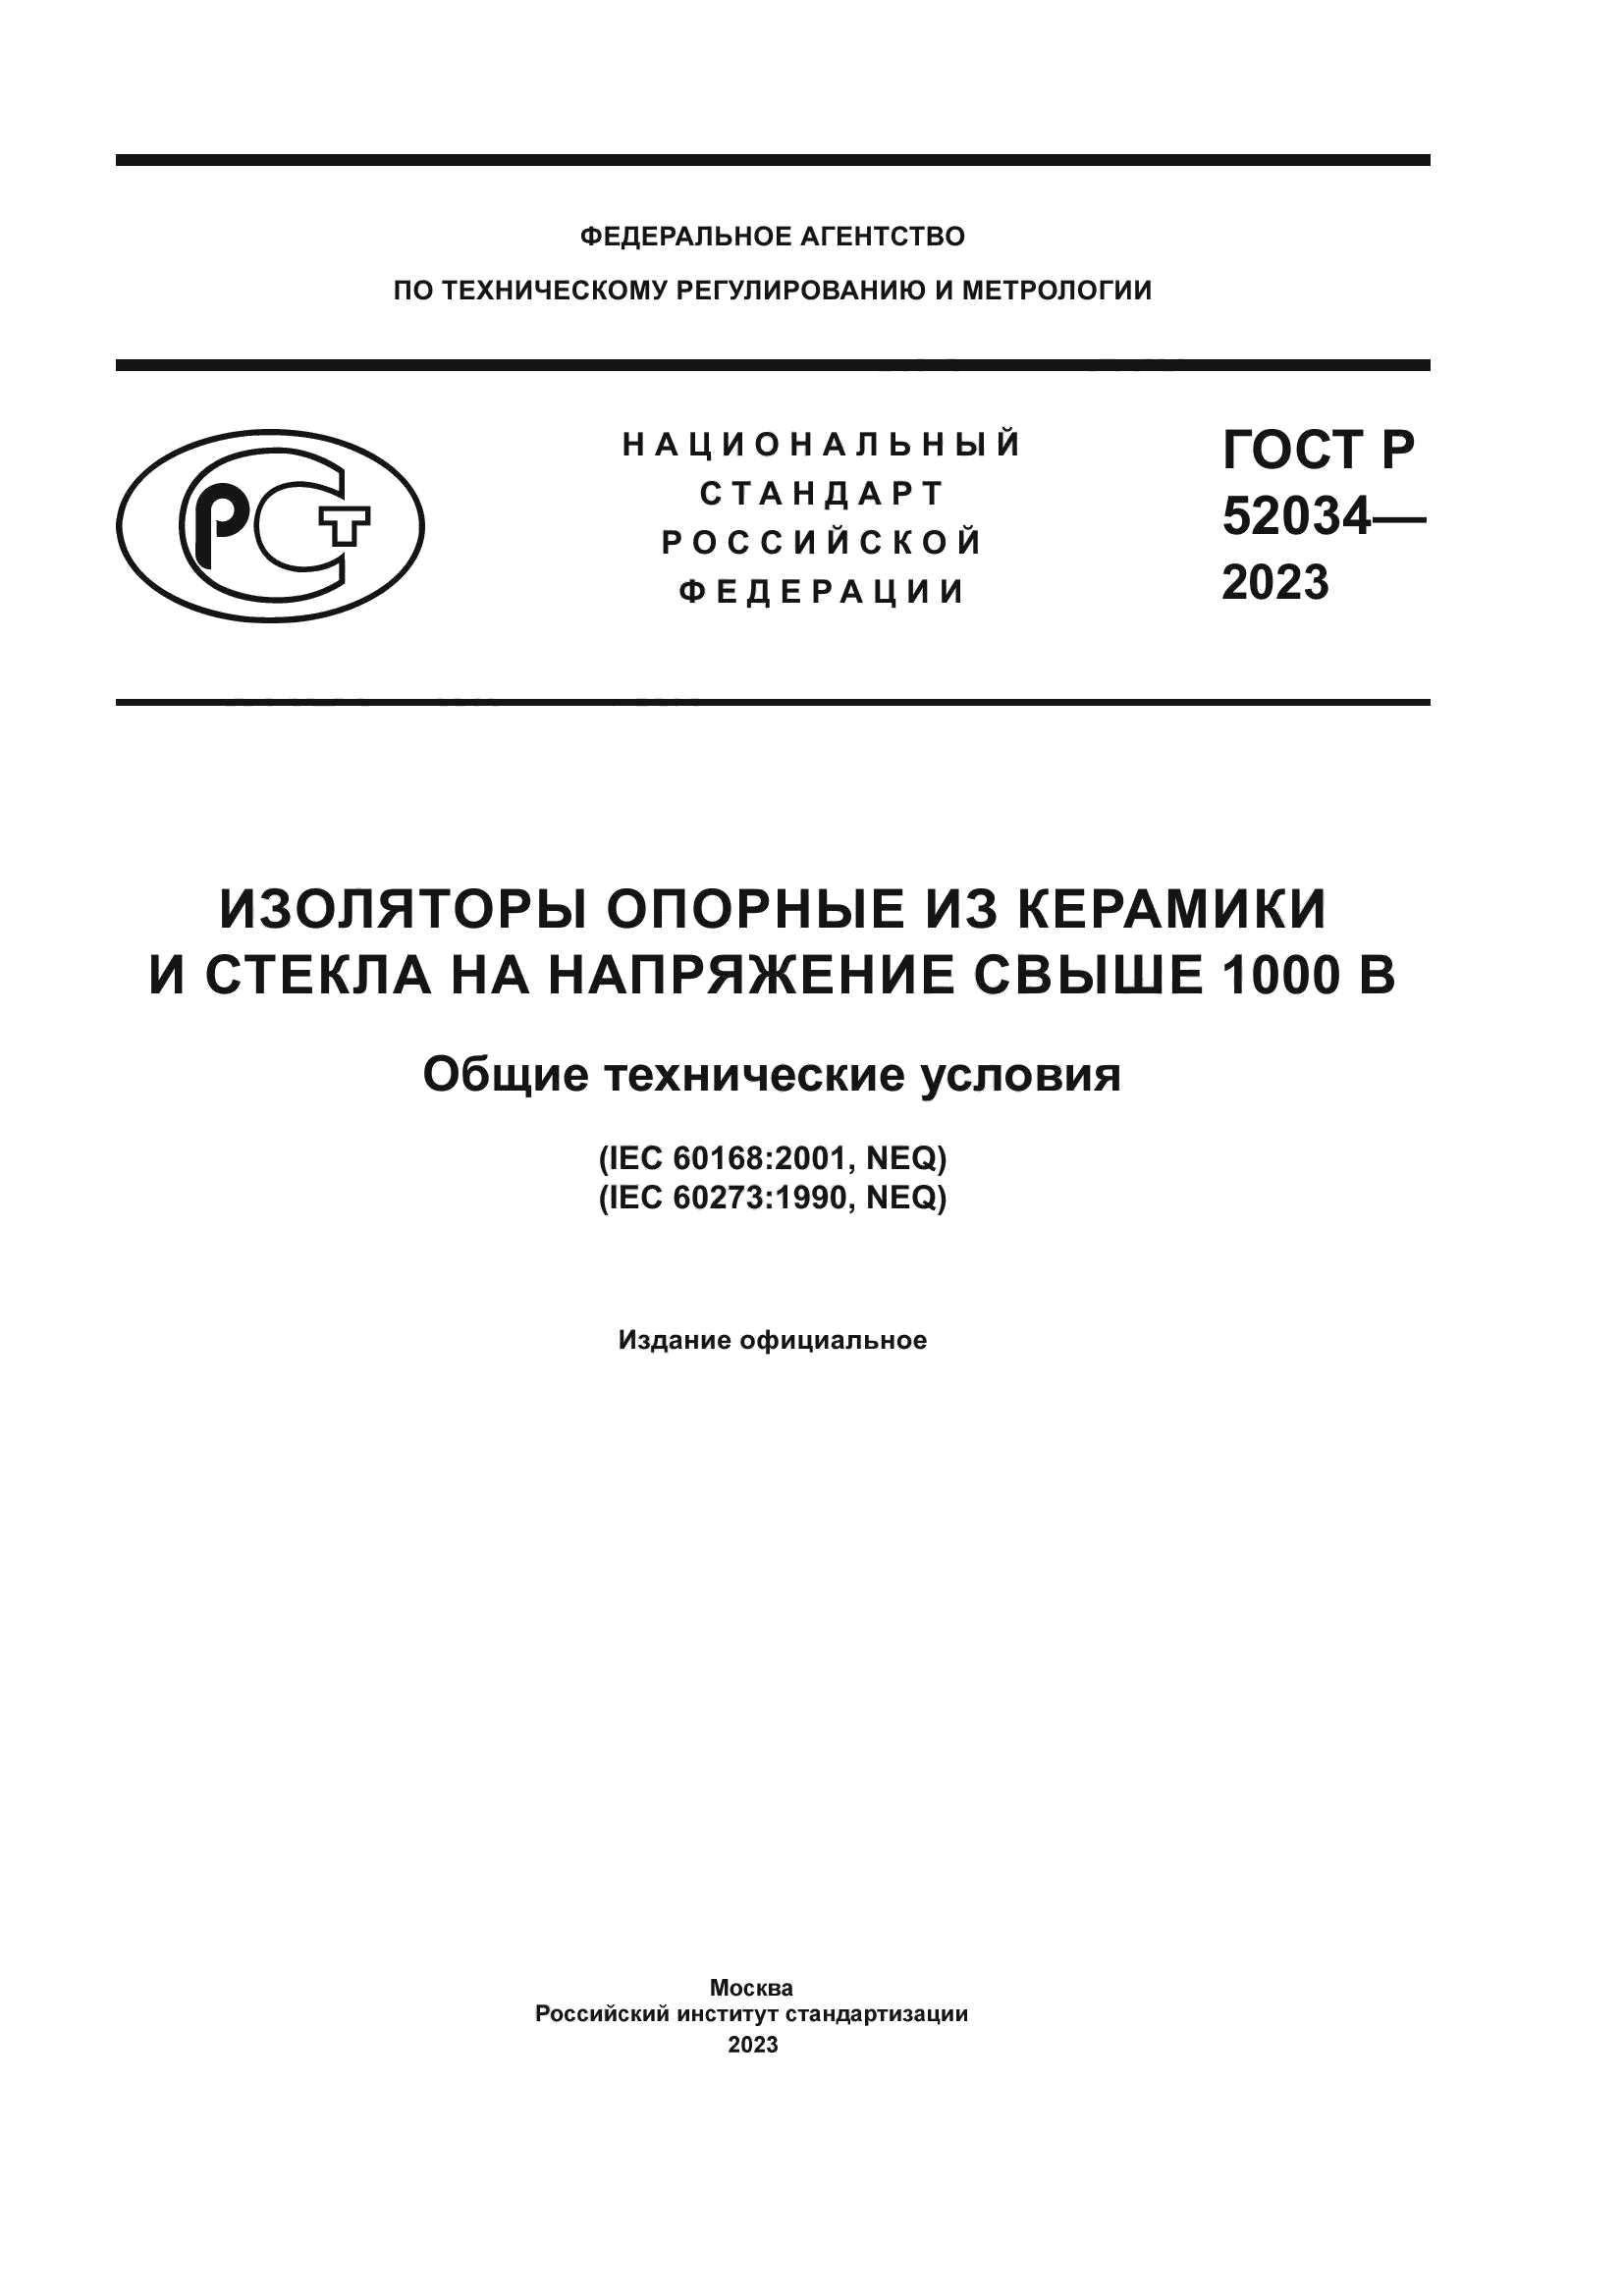 ГОСТ Р 52034-2023